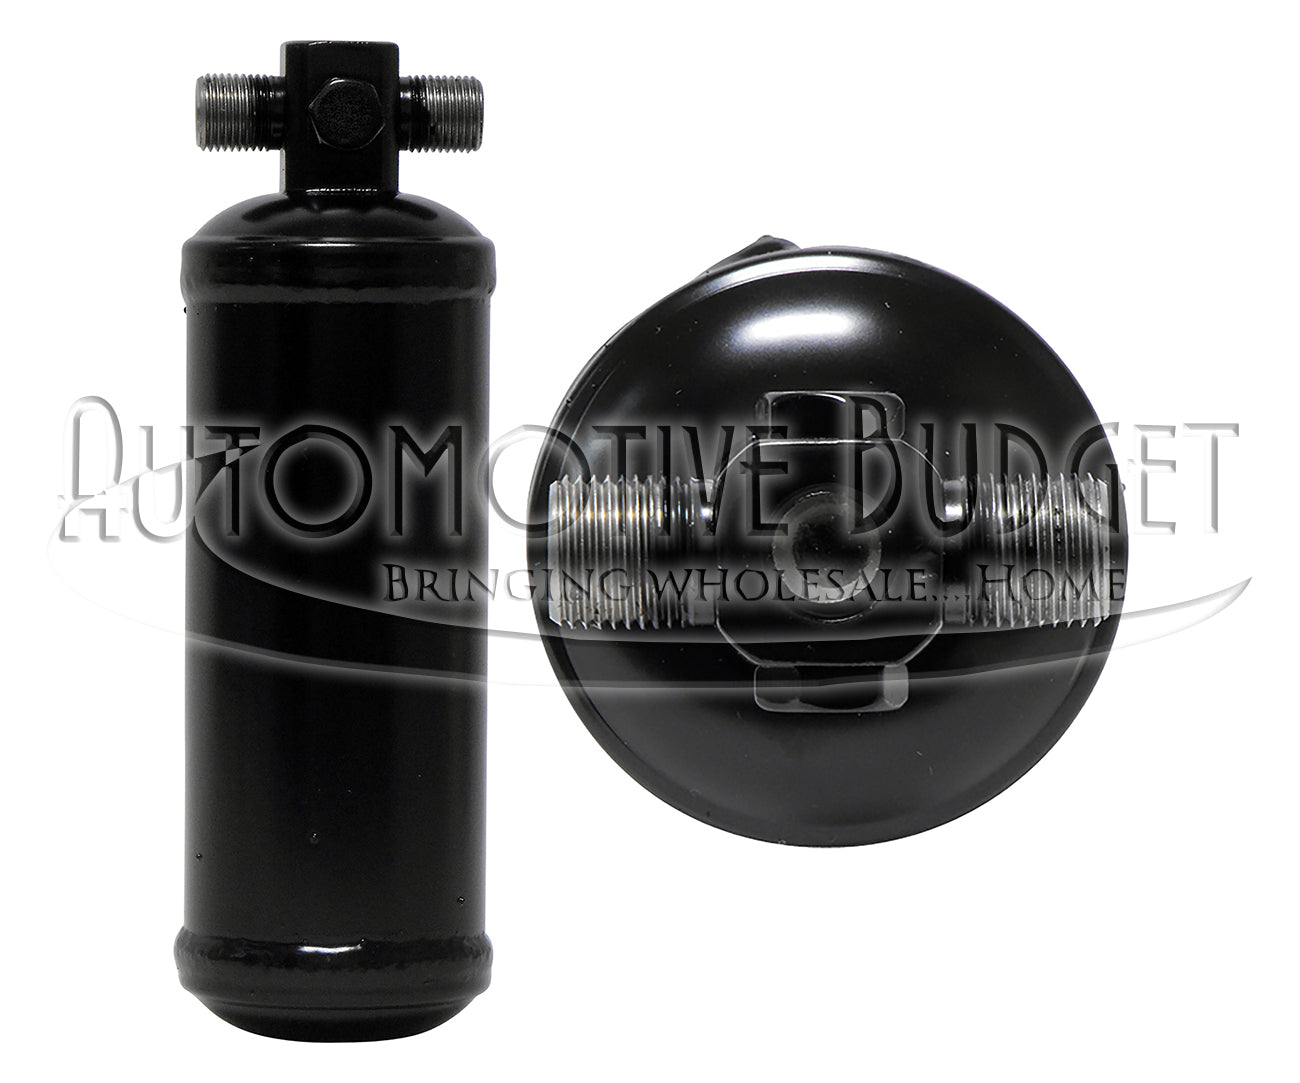 A/C Drier / Dryer Bottle / Purifier for Ferrari 246 Dino 330 & 365 - NEW